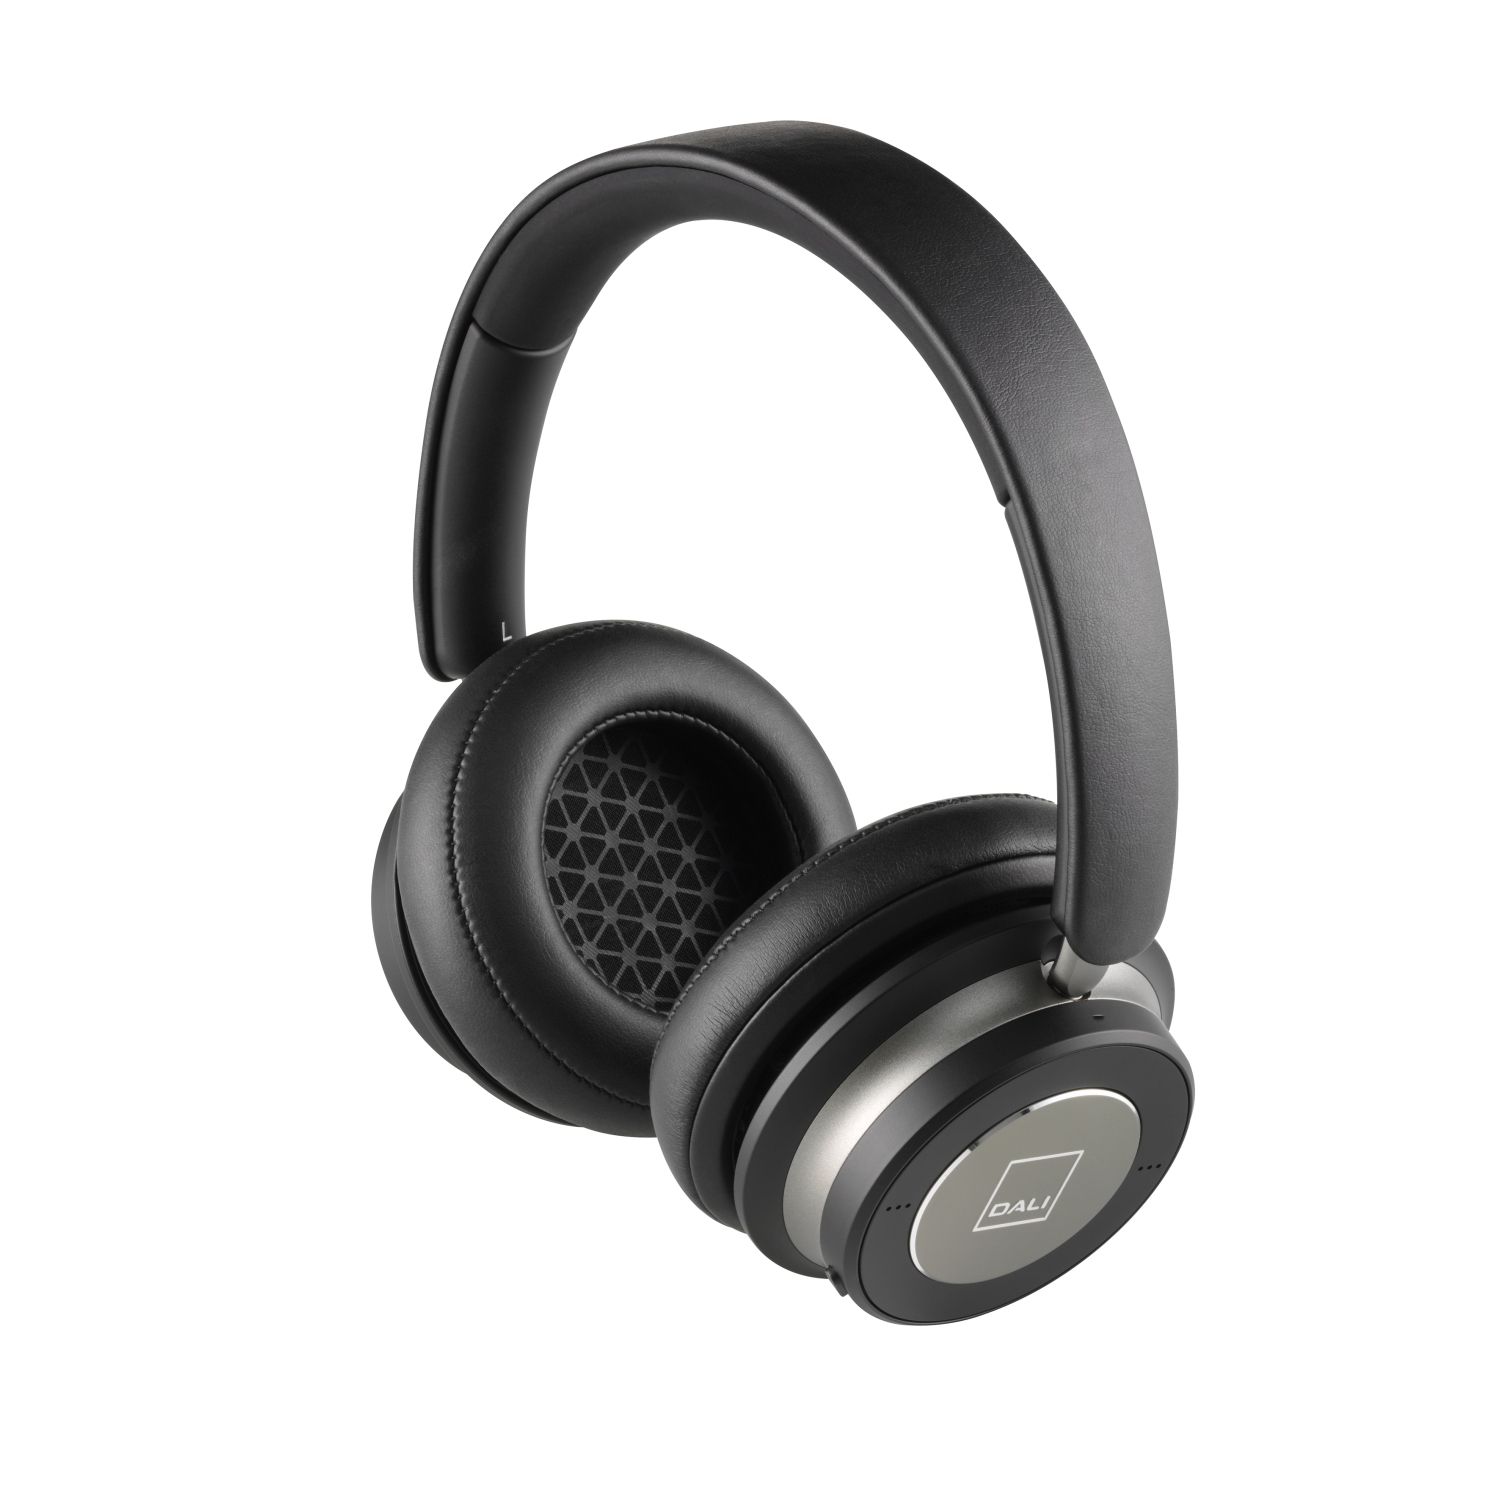 DALI IO-6 Premium Wireless Over-The-Ear Headphone with ANC - Iron Black